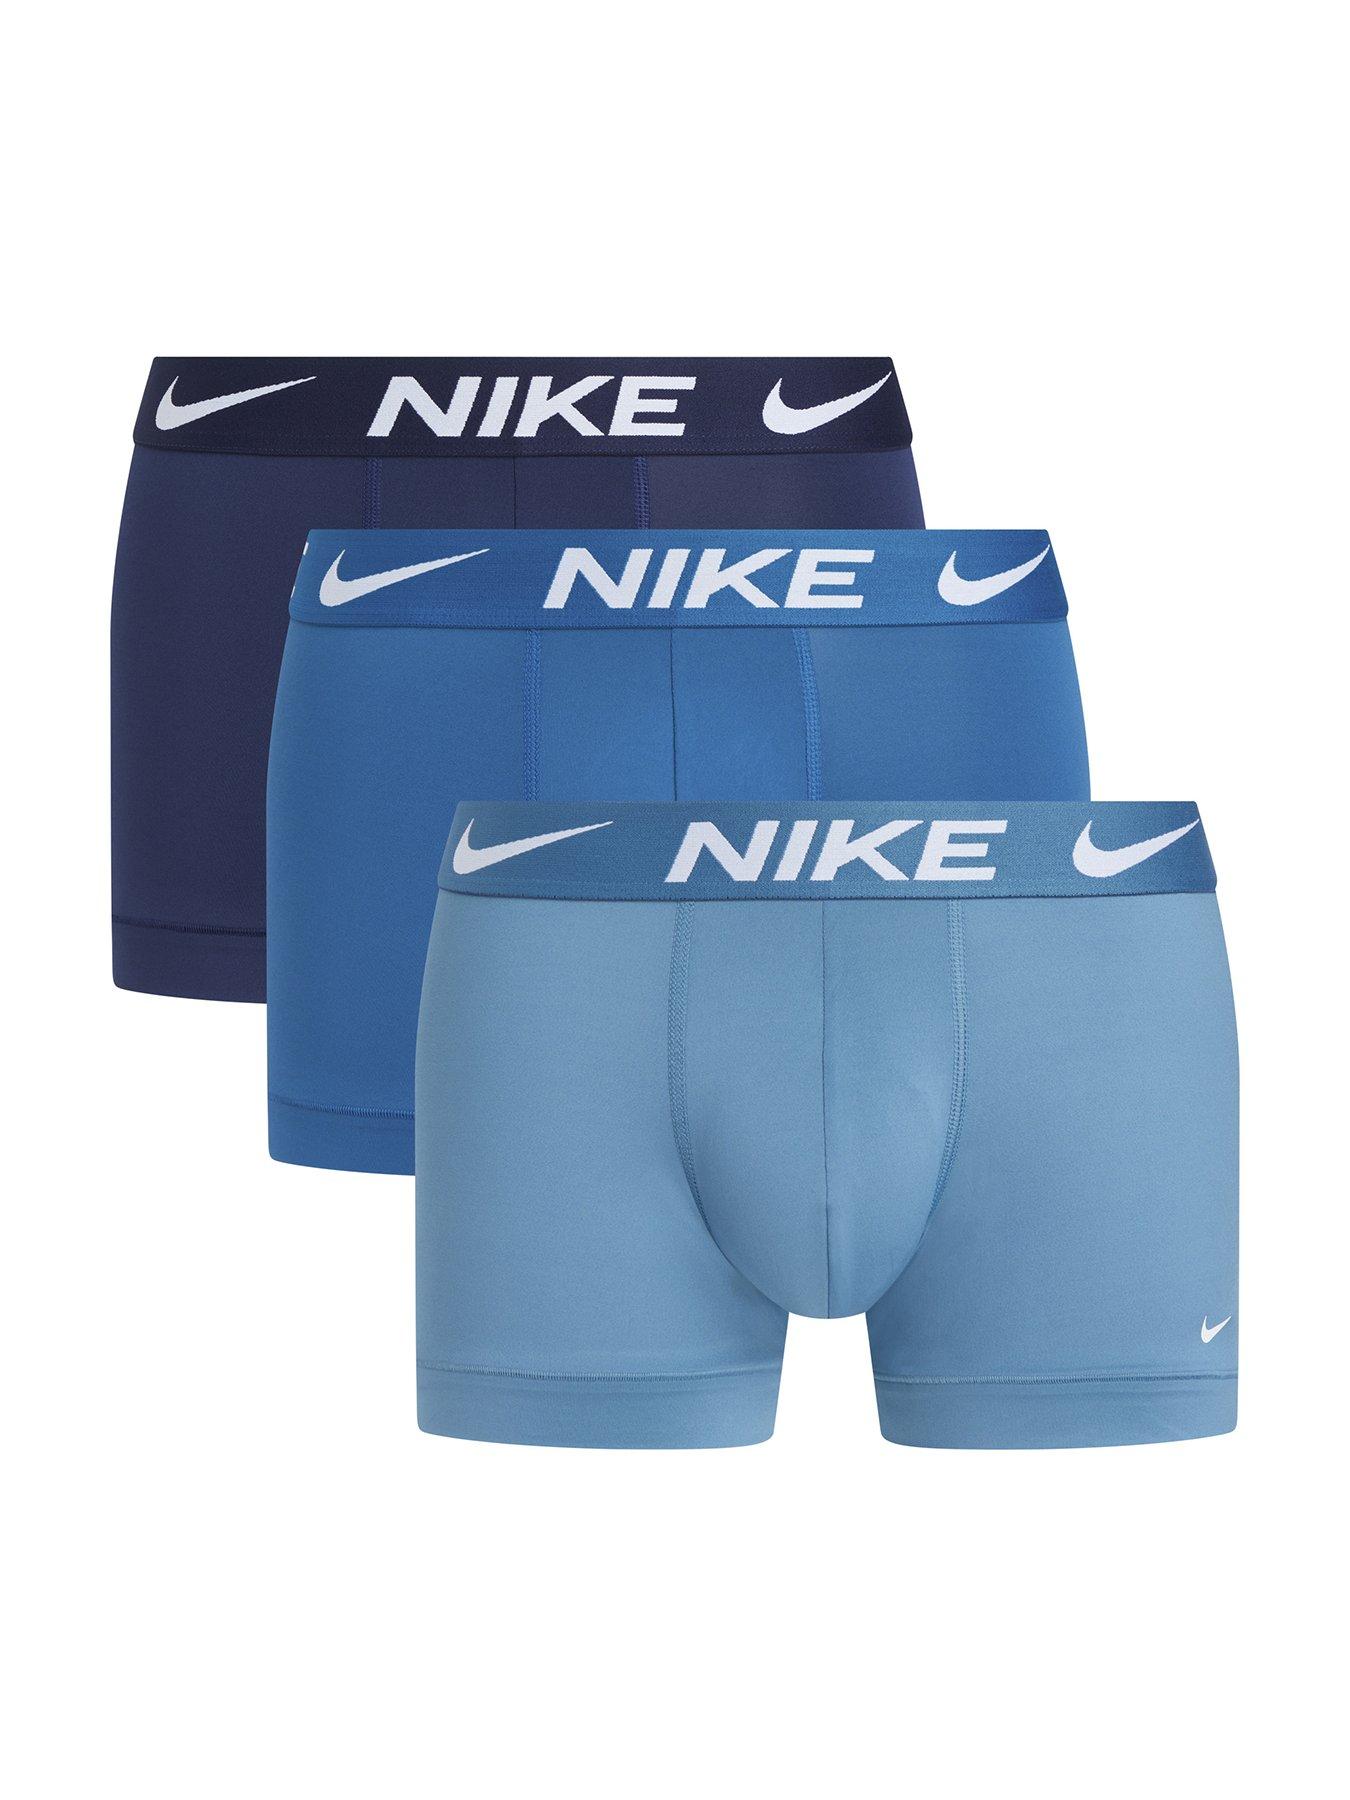 Nike Underwear Nike 3pack Dri-fit Essential Micro Trunk Brief | very.co.uk